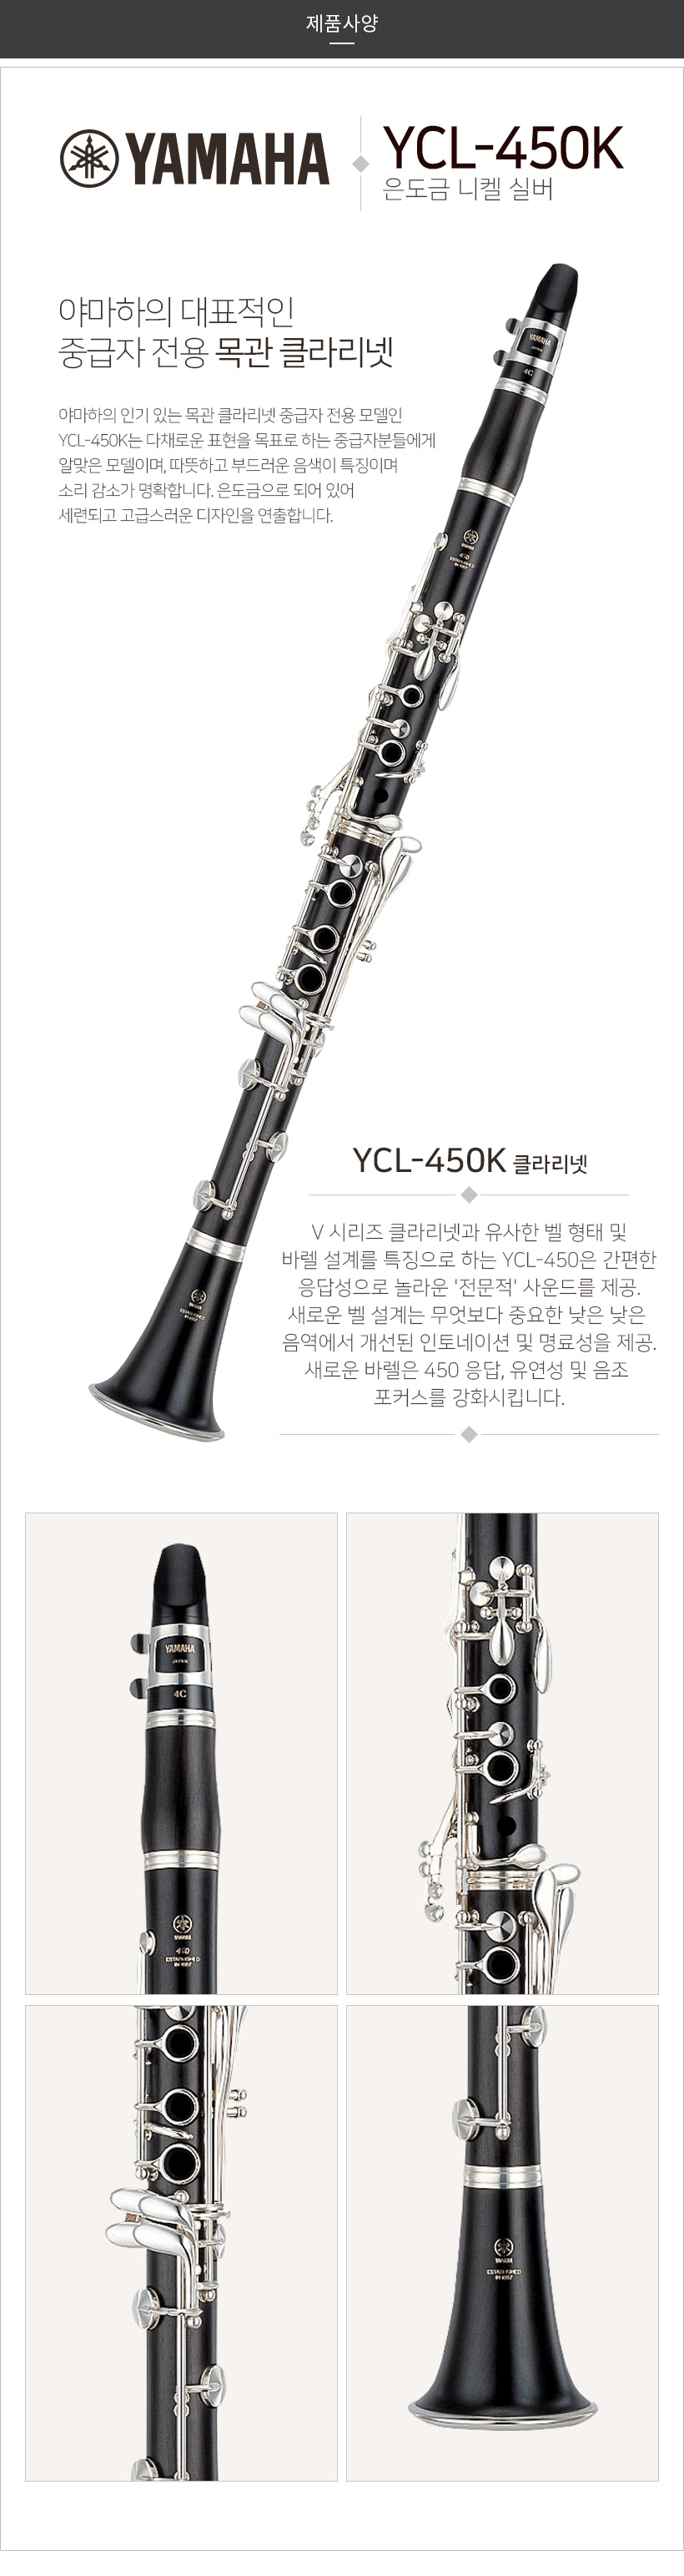 YCL-450K 제품사양